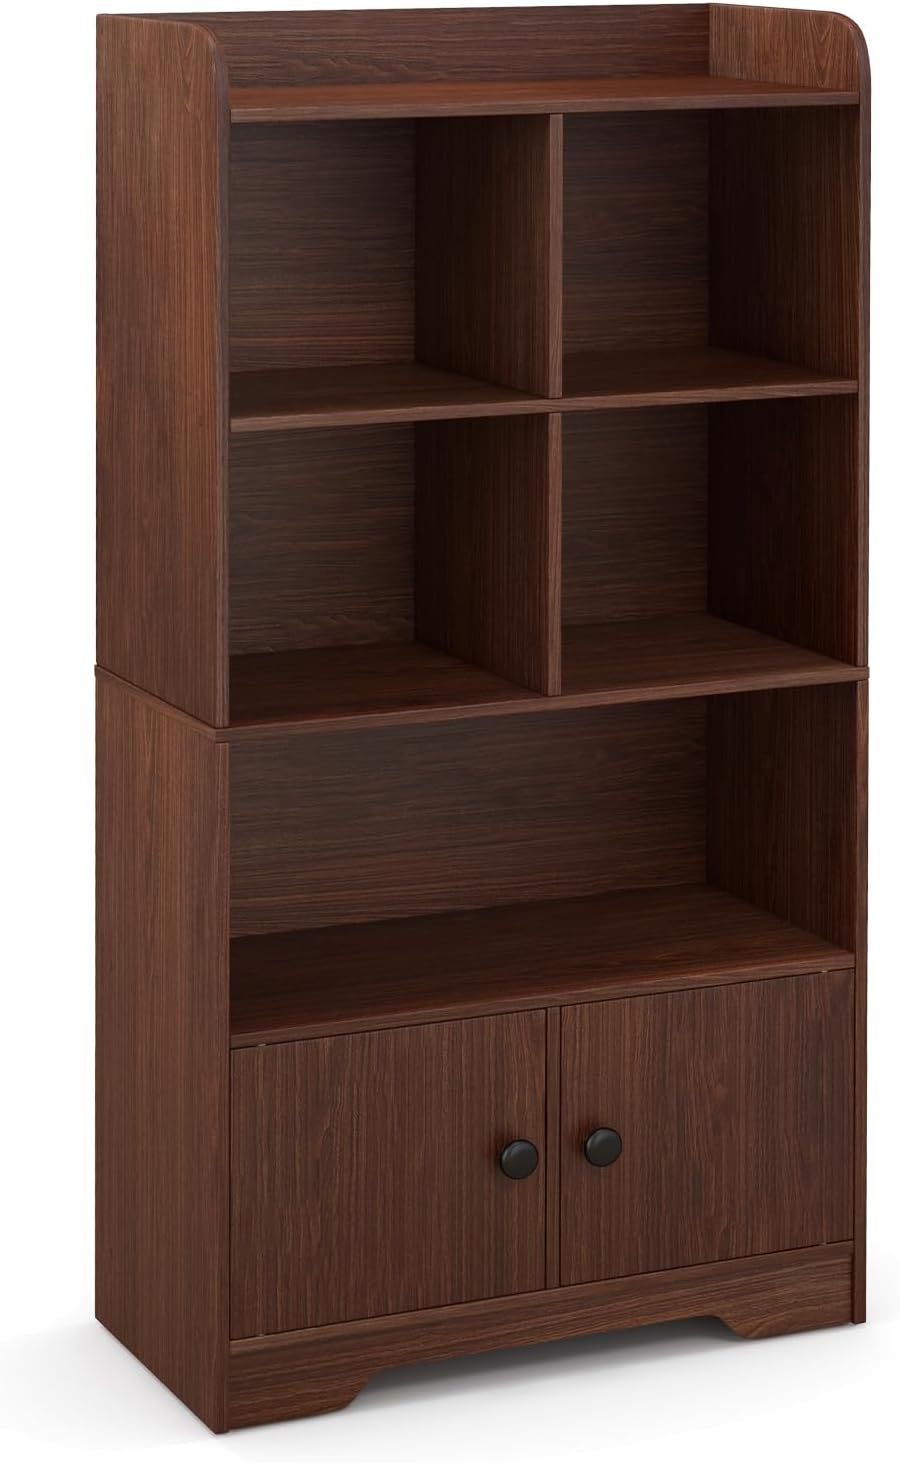 Giantex 4-Tier Bookcase with Doors, 47.5'' Tall Freestanding White Bookshelf with 3 Shelf